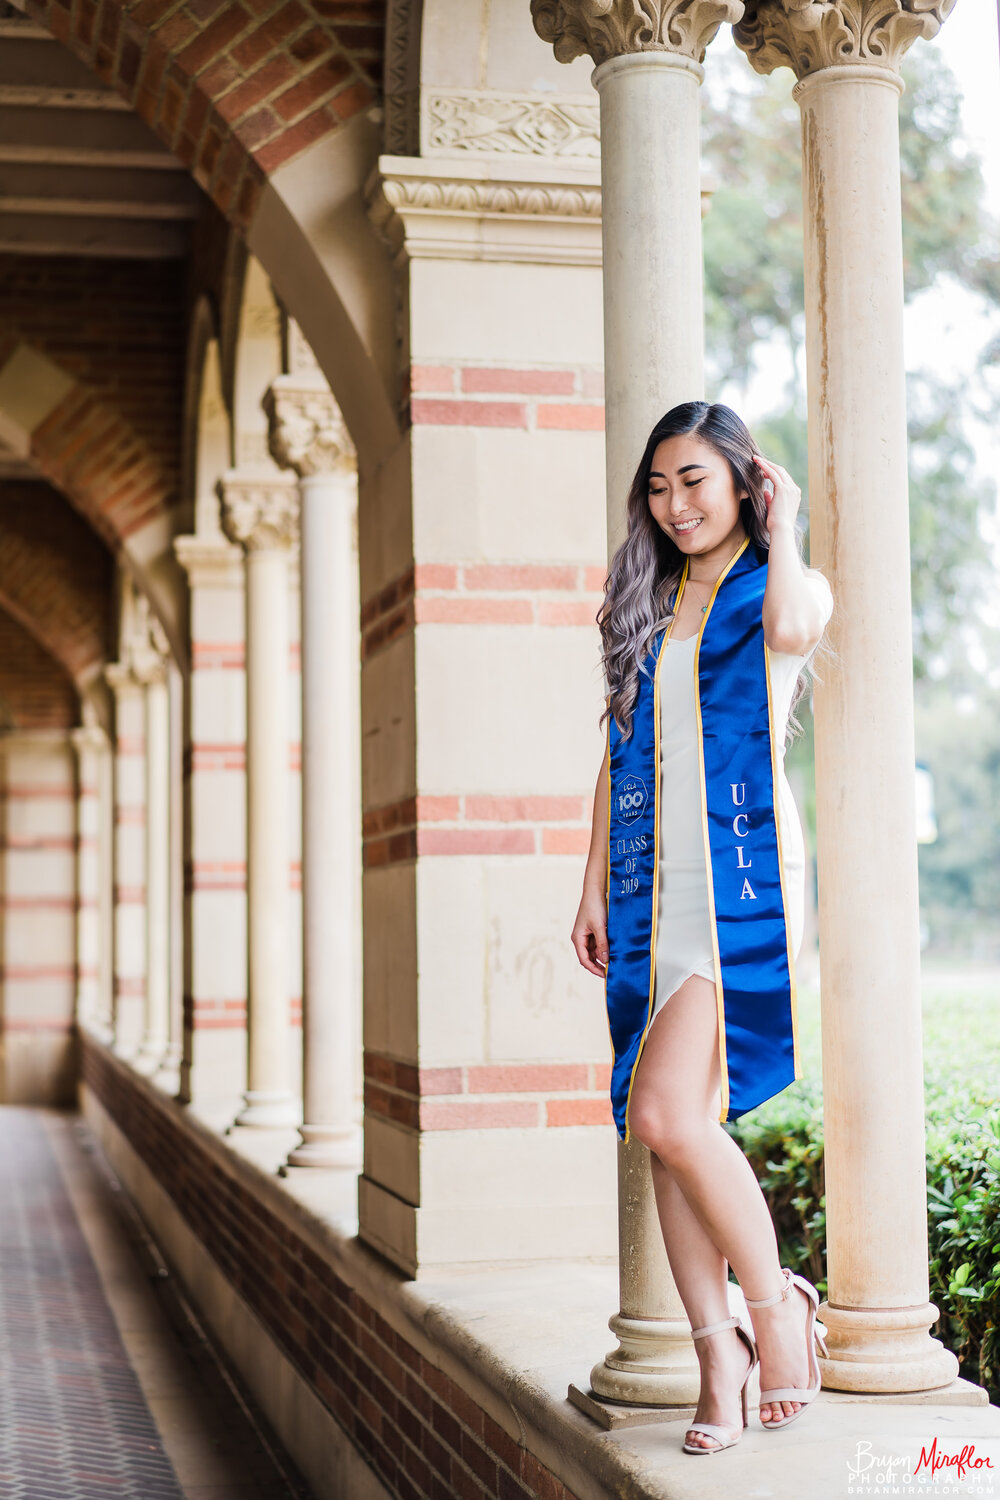 UCLA-Los-Angeles-Grad-Portrait-Photoshoot-Felicia-Bryan-Miraflor-Photography-004.jpg